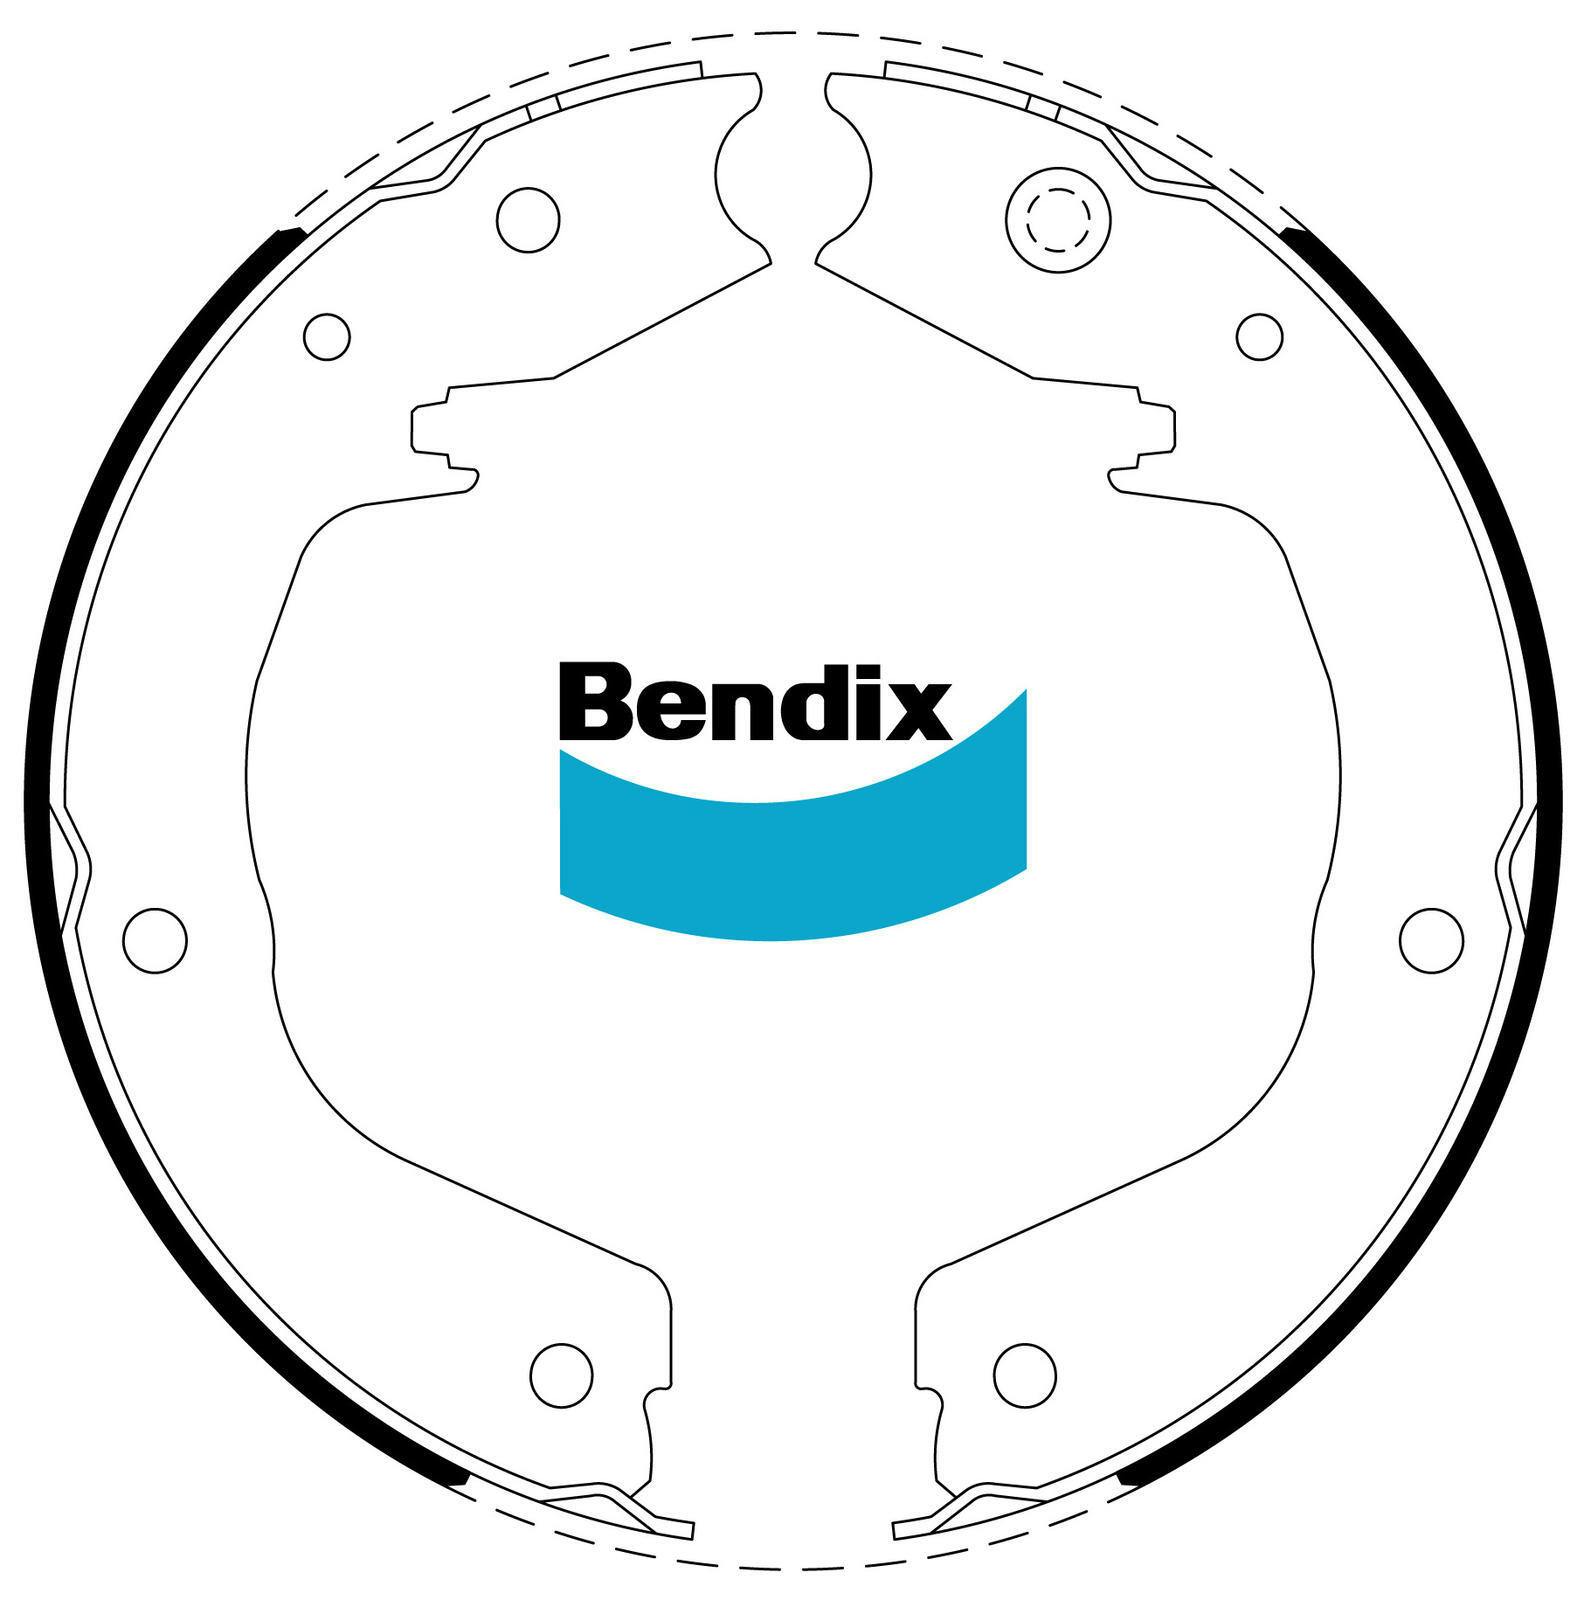 BR660 2 x Bendix Ultimate Performance  Rotor FOR MITSUBISHI PAJERO NM